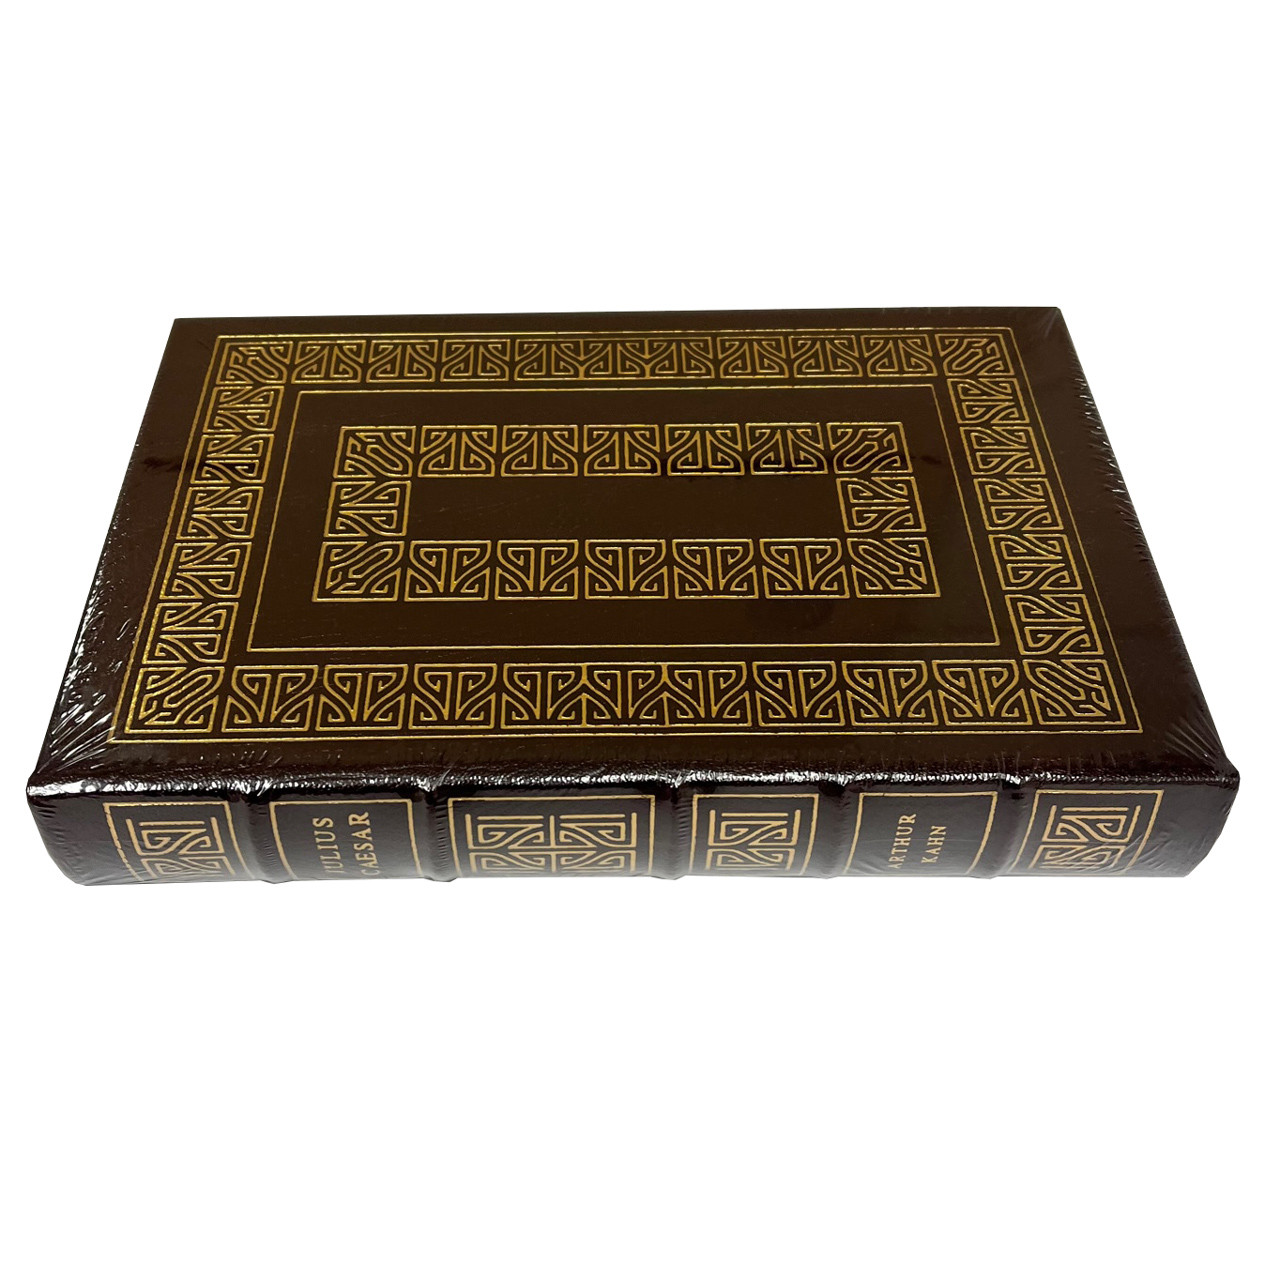 Easton Press, Arthur D. Kahn "The Education of Julius Caesar" Leather Bound Collector's Edition [Sealed]